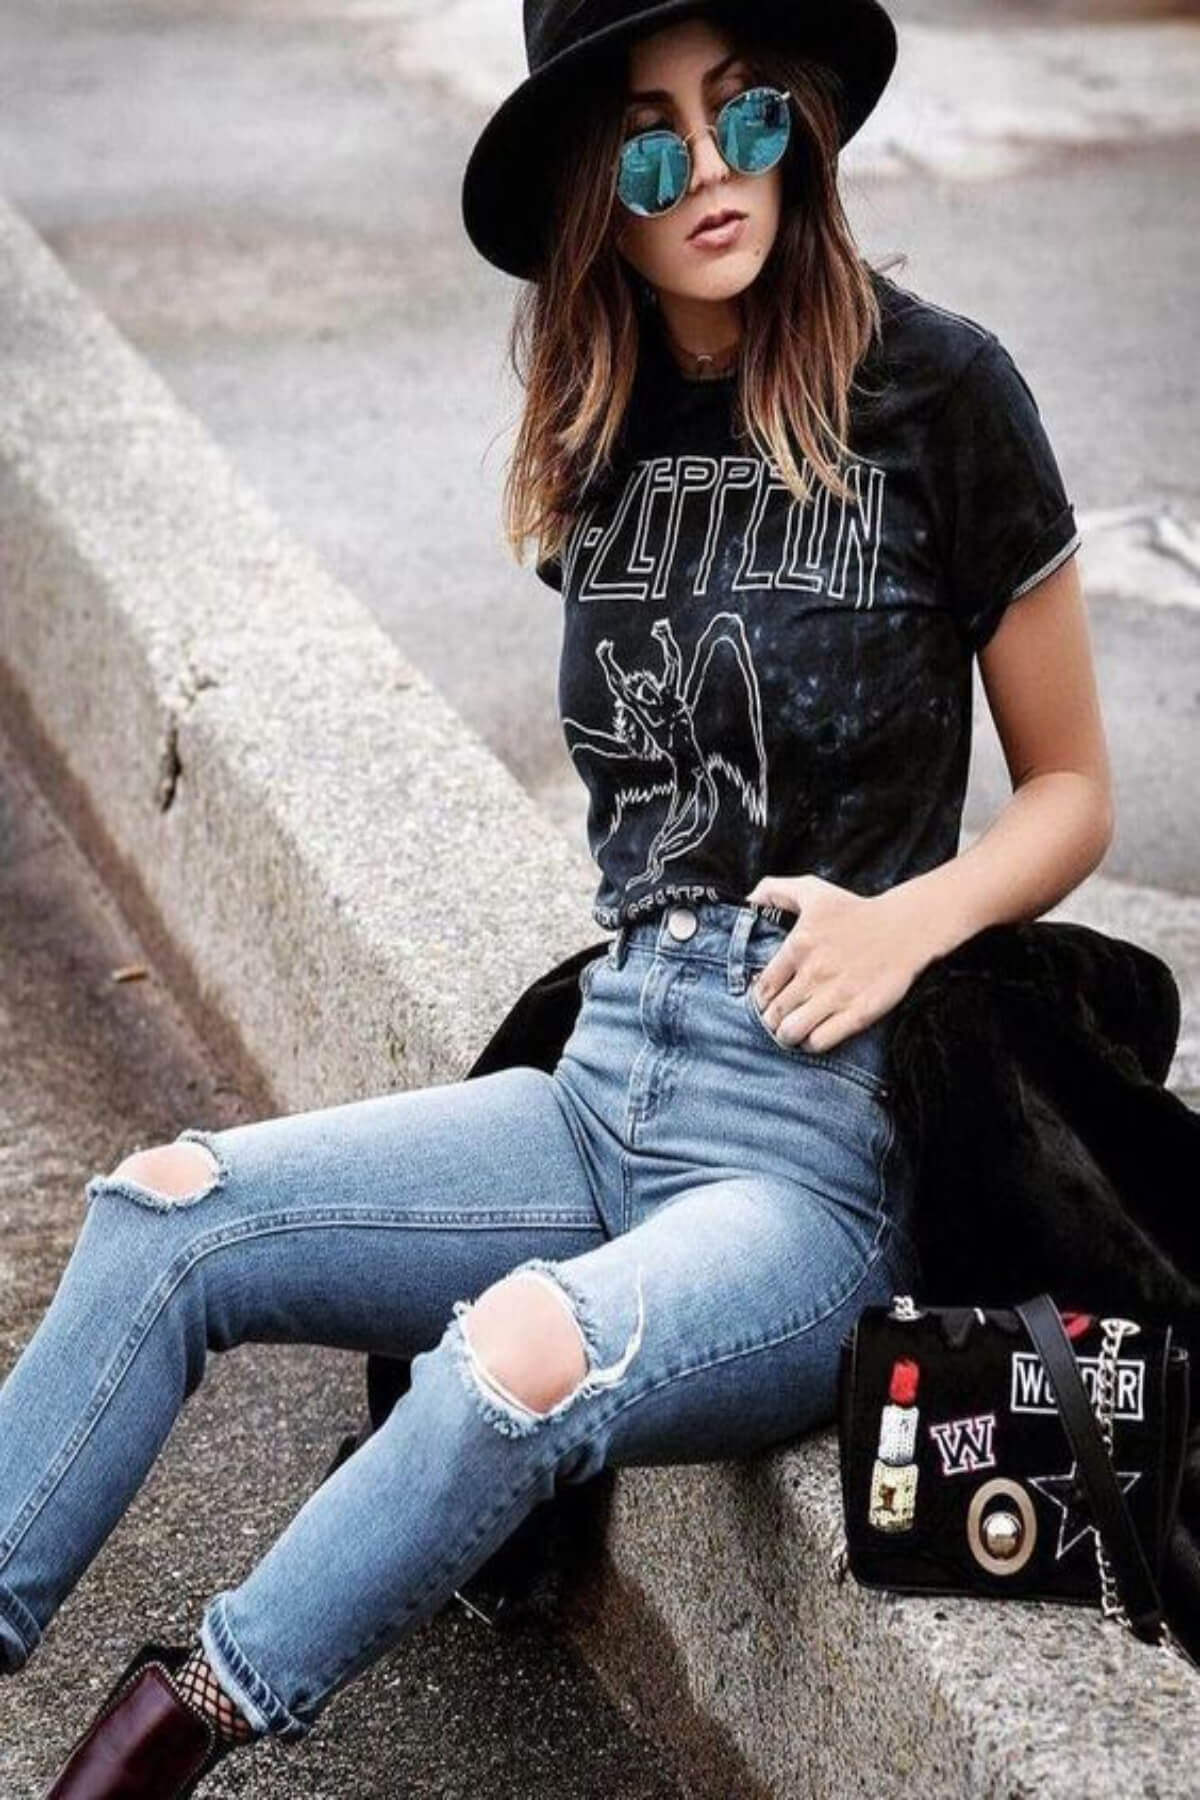 2. Tinute rock-blugi rupti-tricou cu imprimeu rock-palarie neagra-ochelari de soare-geanta neagra